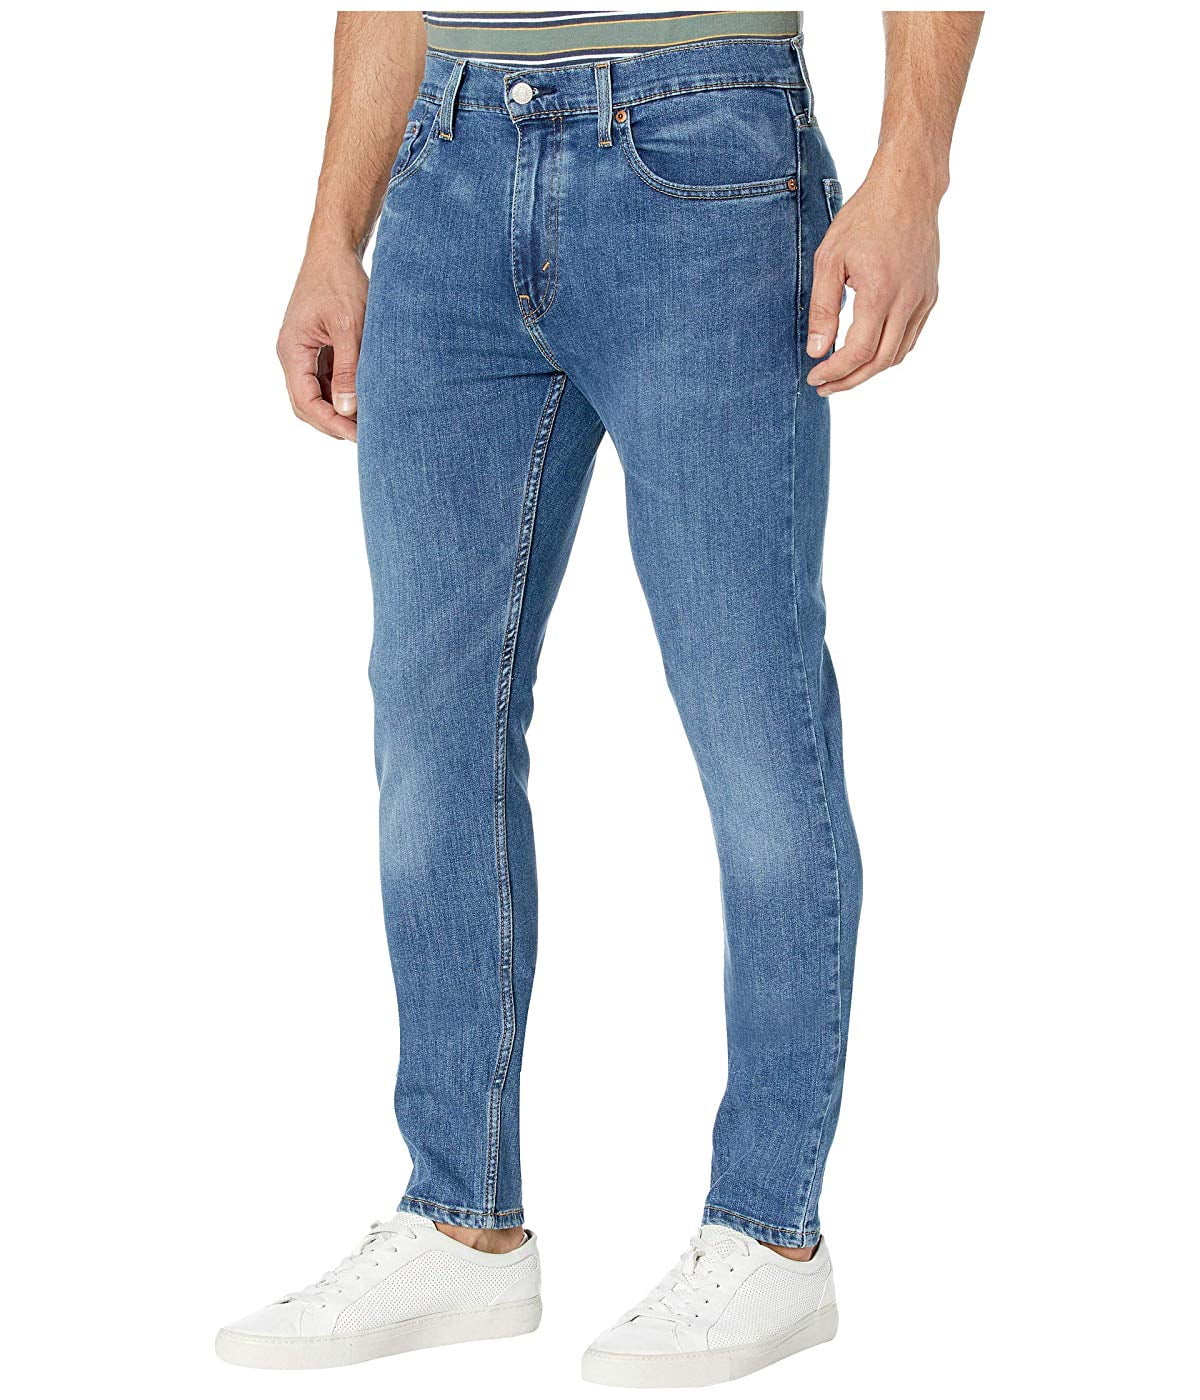 SID NEW Levi's Men's 511 Slim Fit Jeans